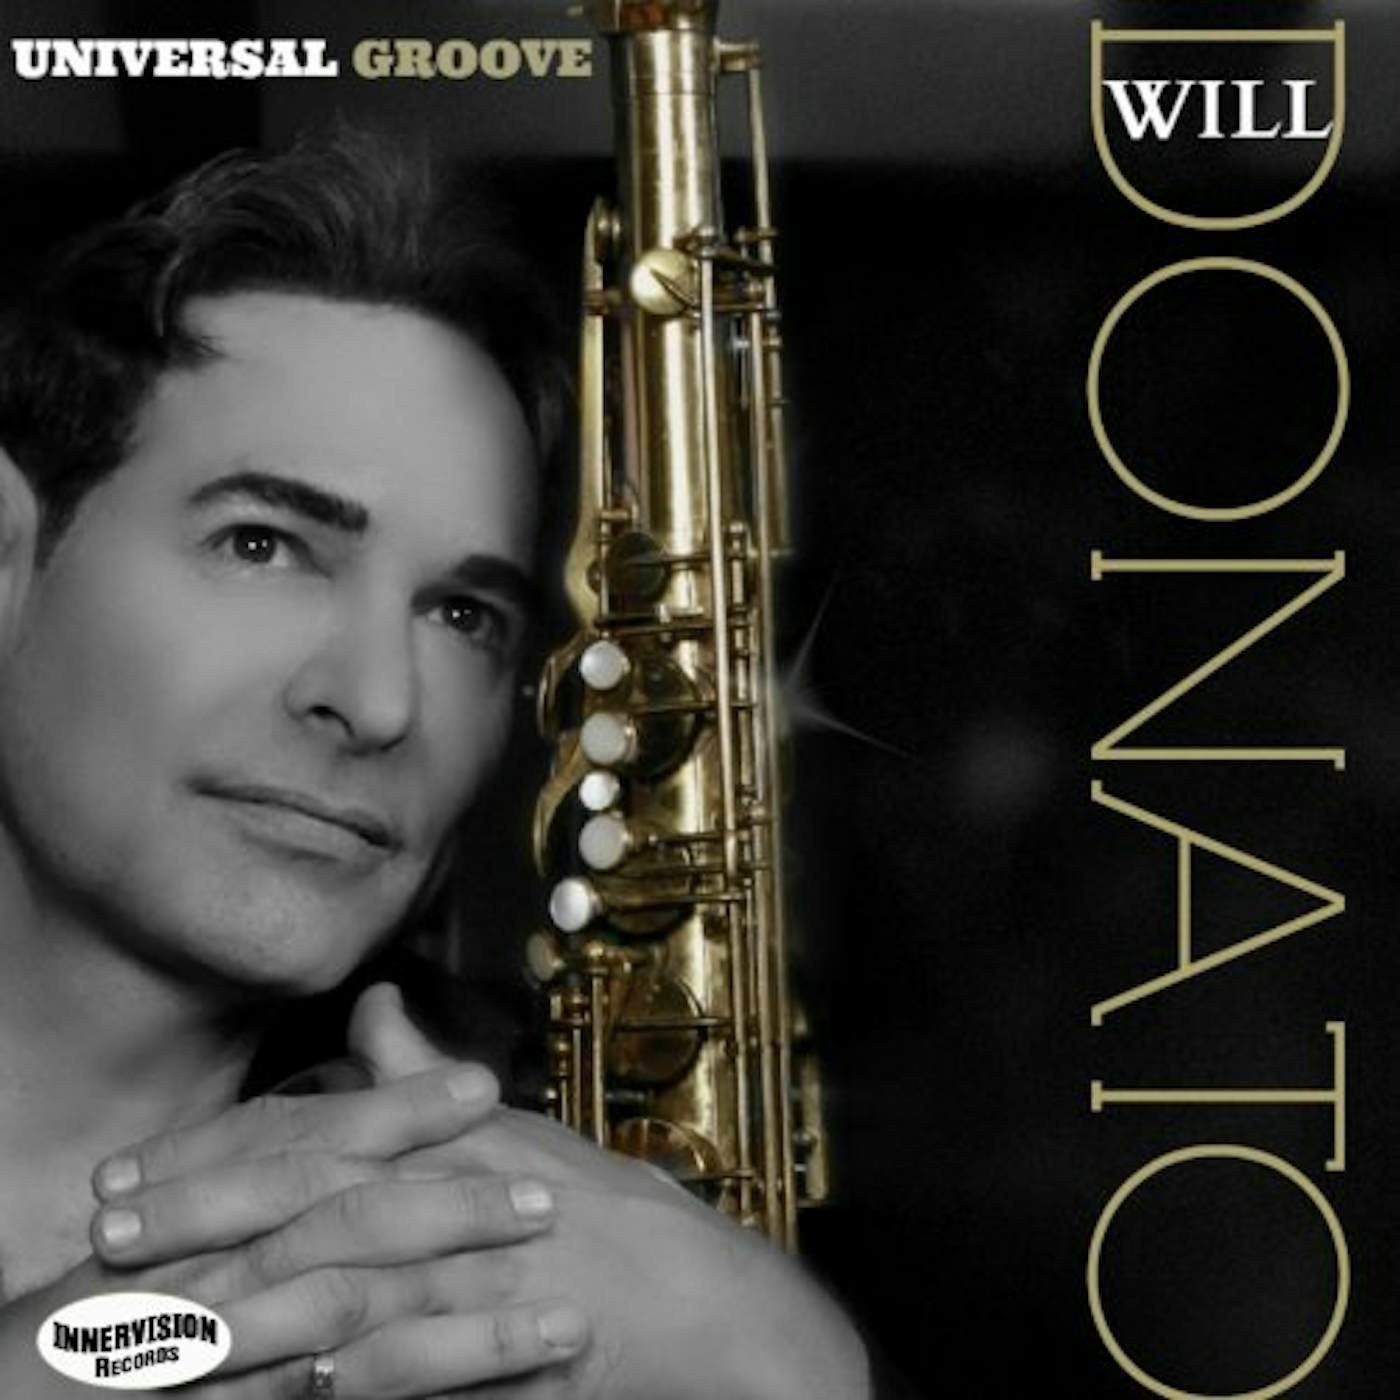 Will Donato UNIVERSAL GROOVE CD